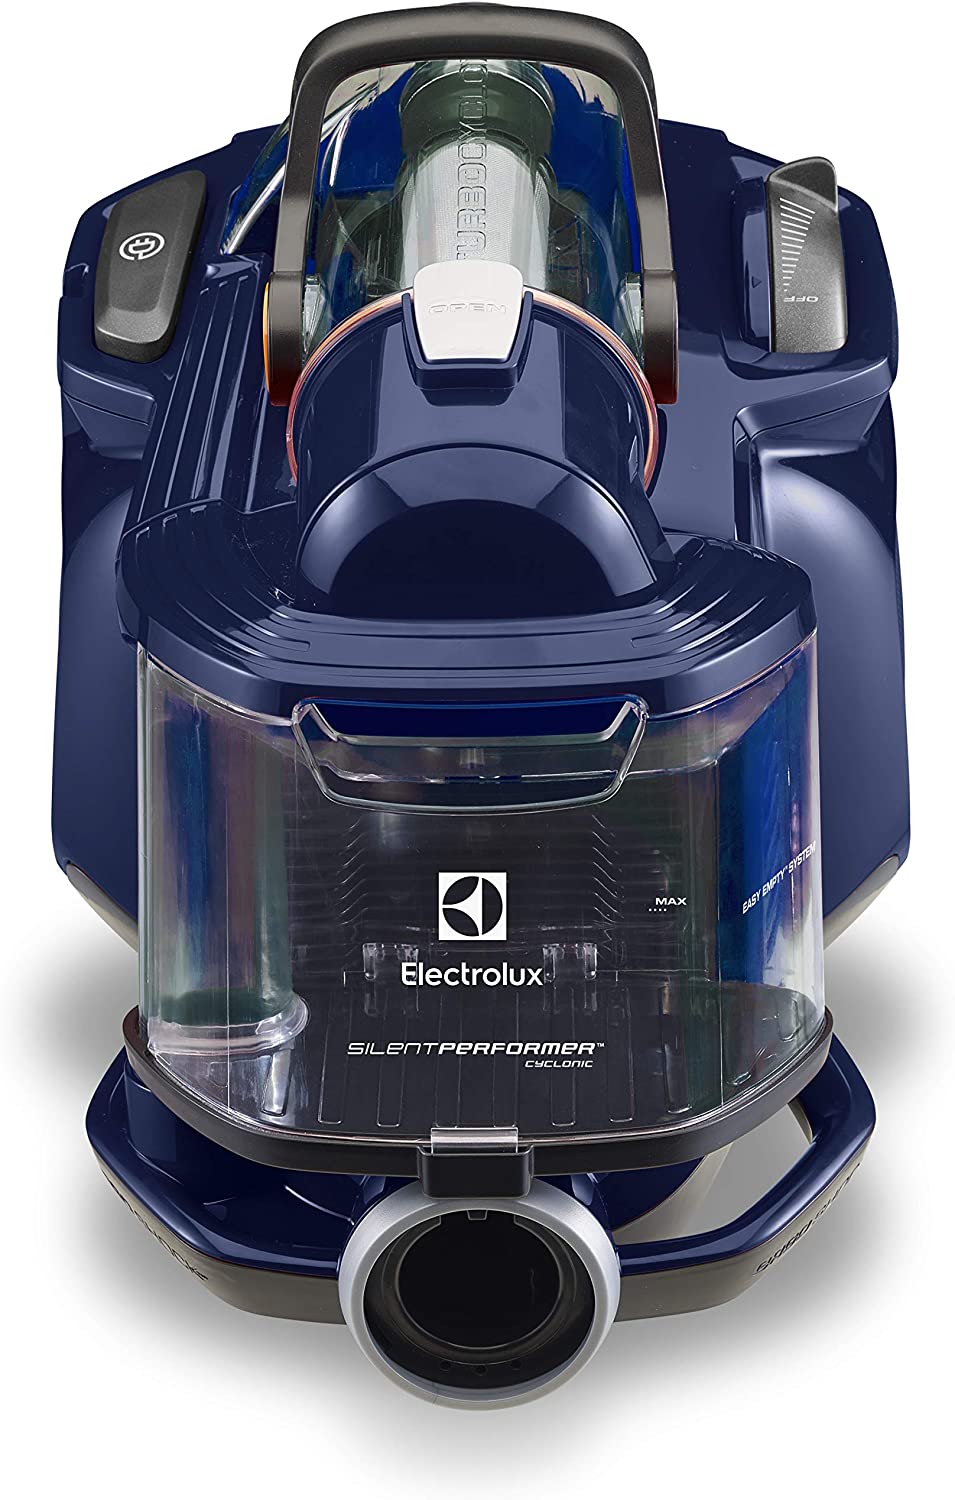 ELECTROLUX Silent Performer Cyclonic Vacuum Cleaner, Blue 2 Liters 2000 Watts مكنسة كهربائية الكترولوكس